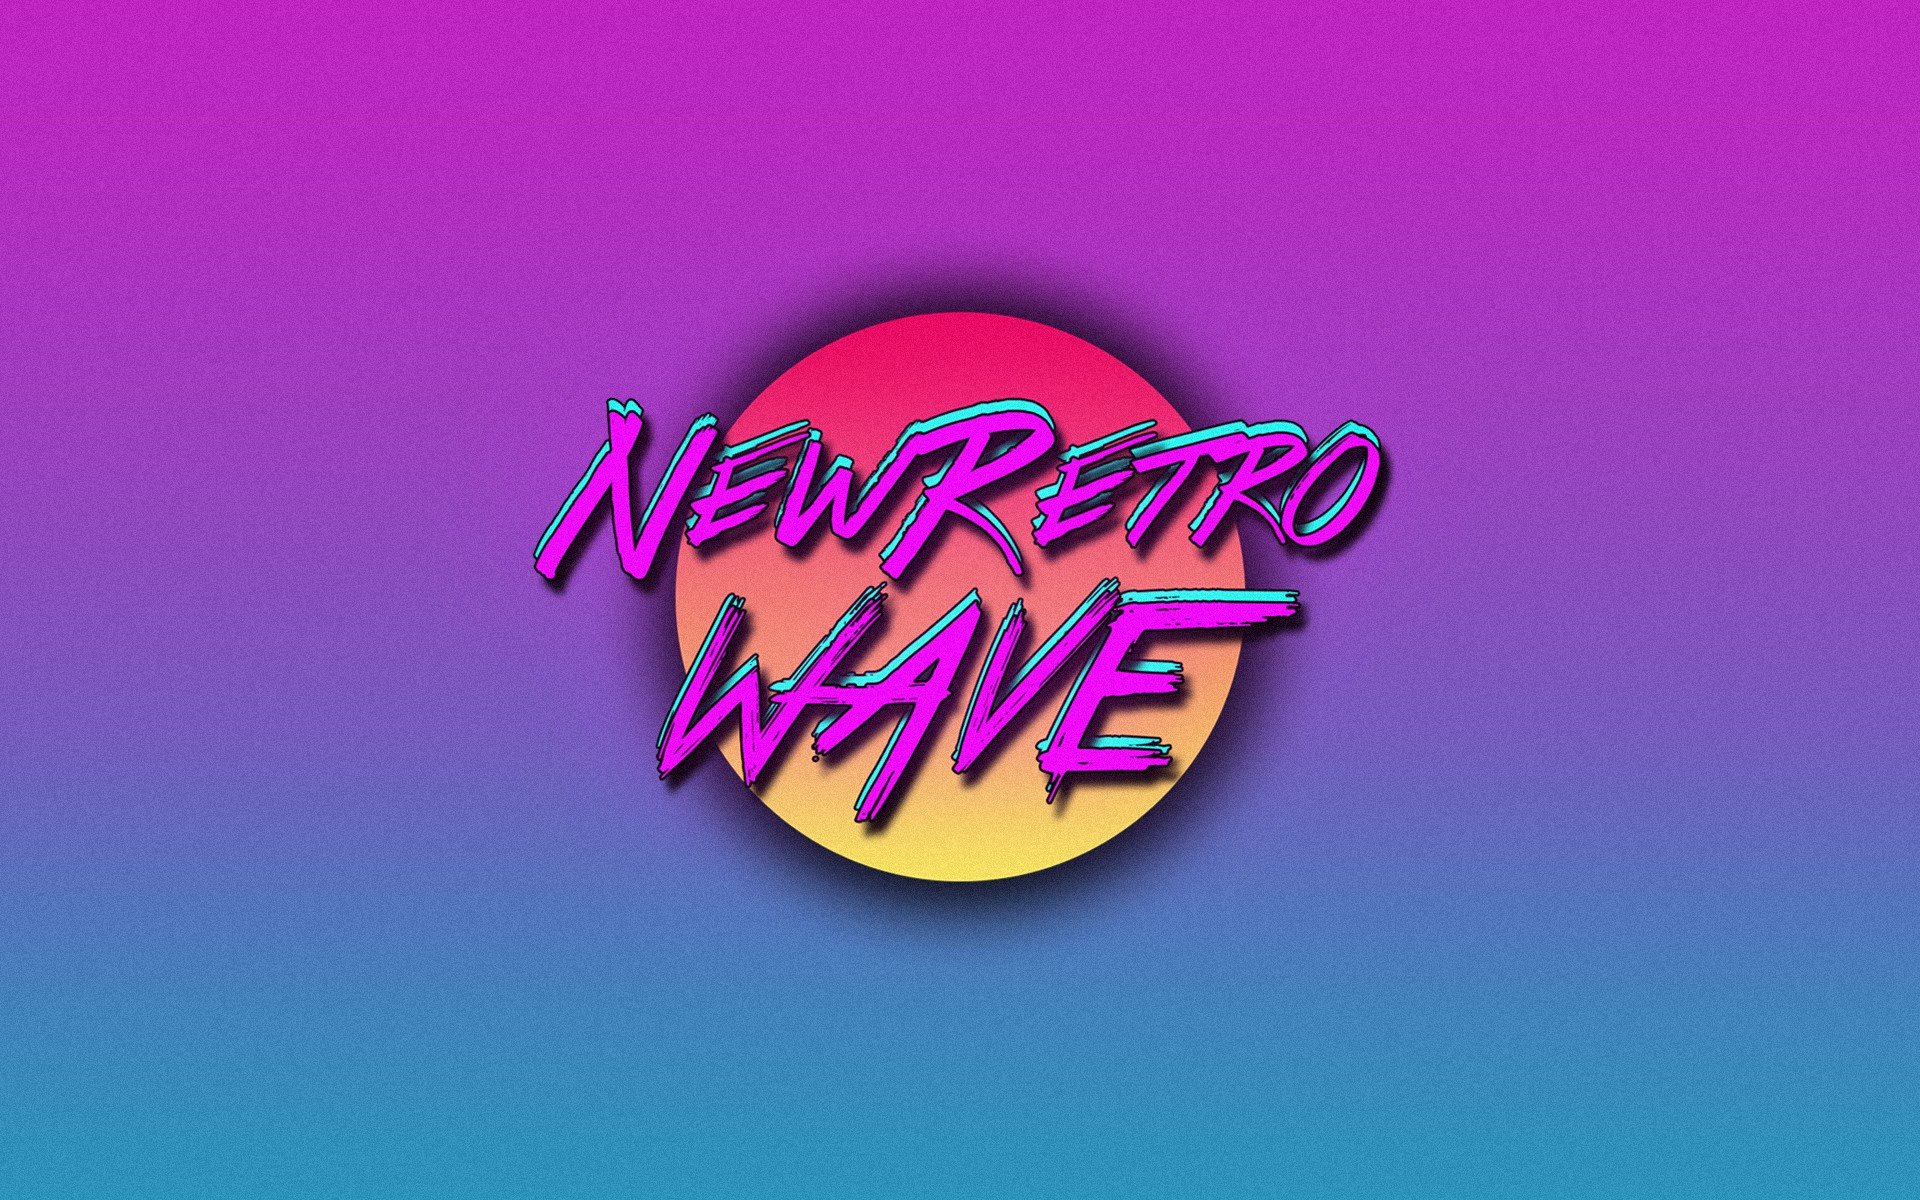 New Retro Wave, Vintage, Synthwave, Neon, 1980s, Retro games Wallpaper